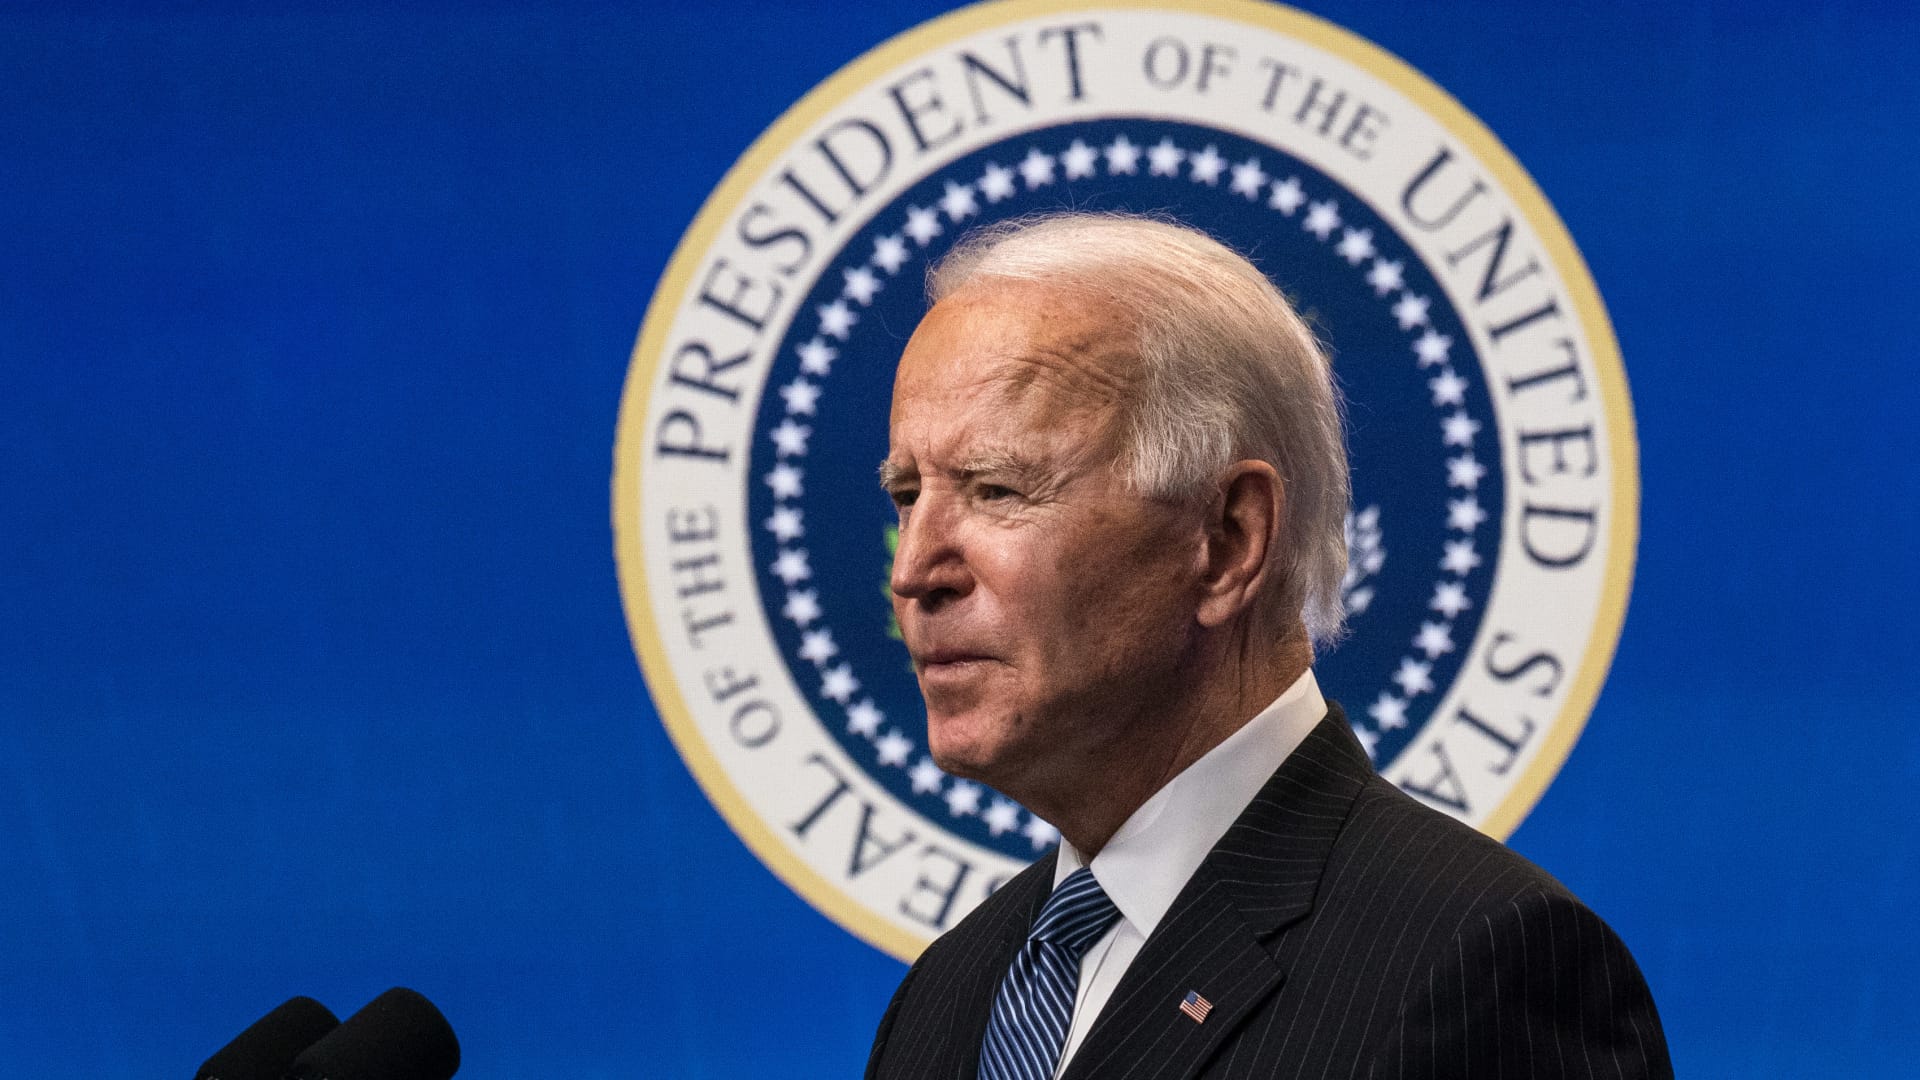 U.S. President Joe Biden in Washington, D.C. on Jan. 25, 2021.